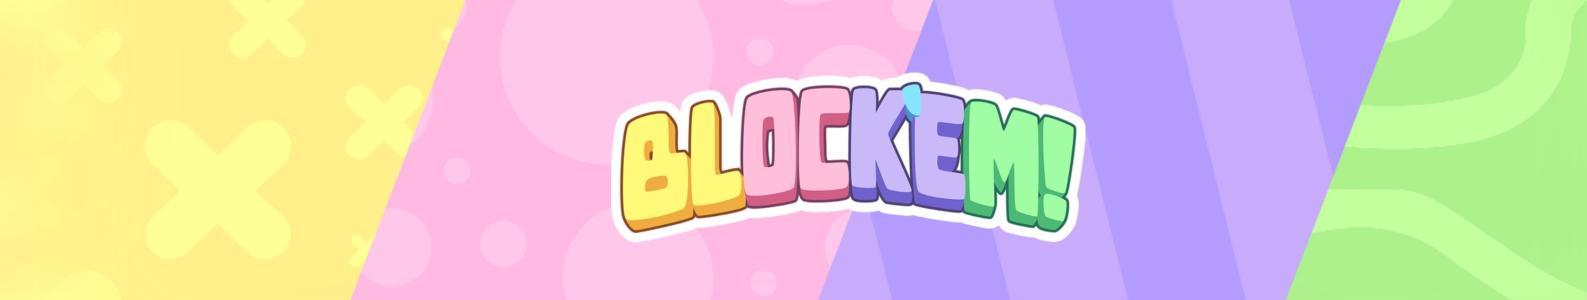 Block'Em! banner